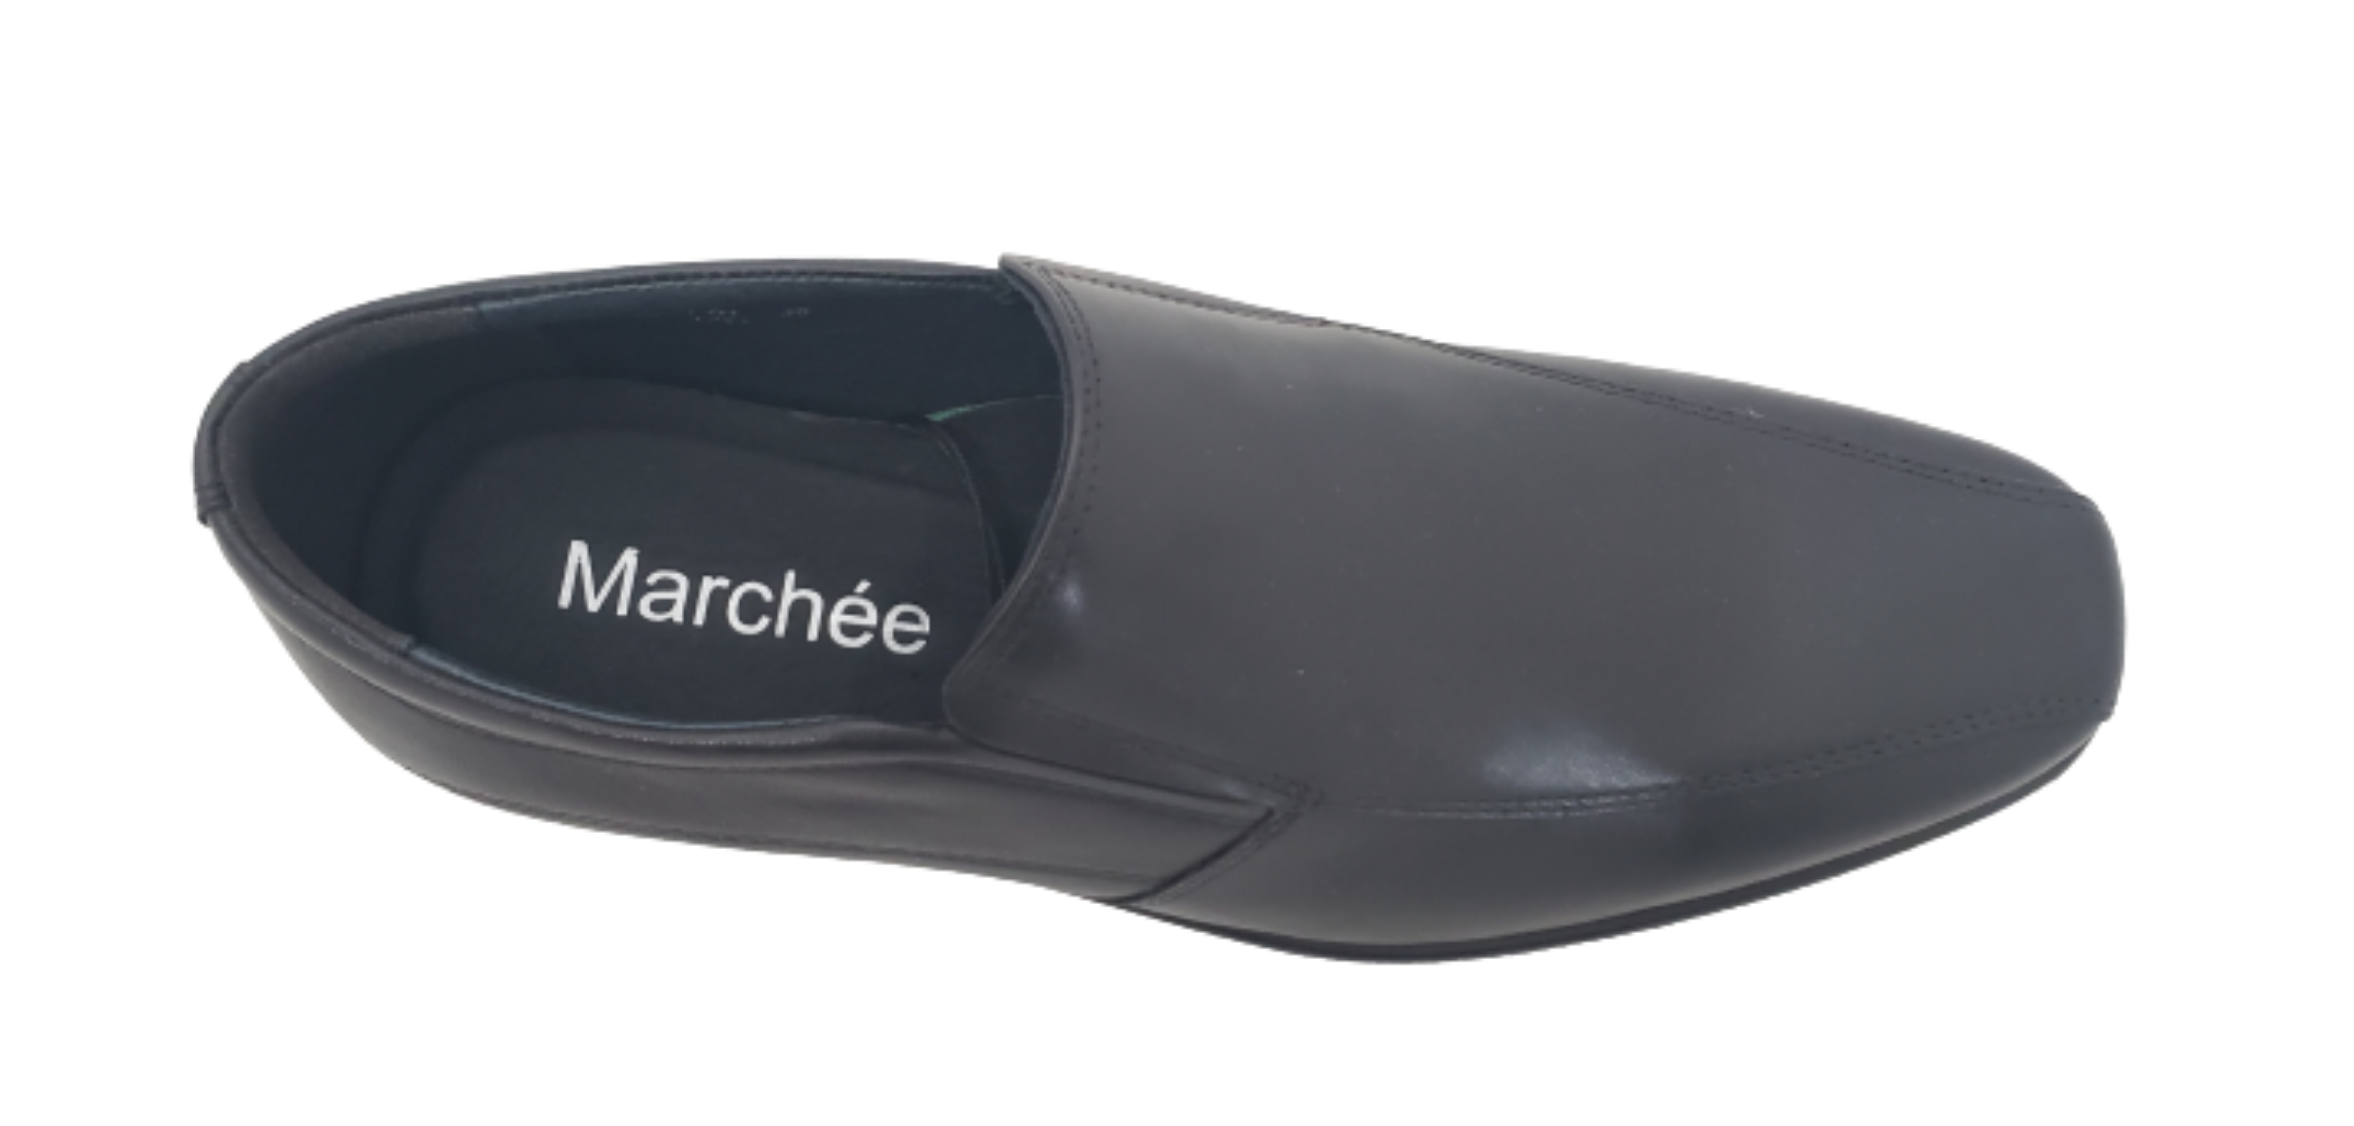 MARCHEE MEN'S BLACK BIKE TOE SLIP ON SHOES - M771-01